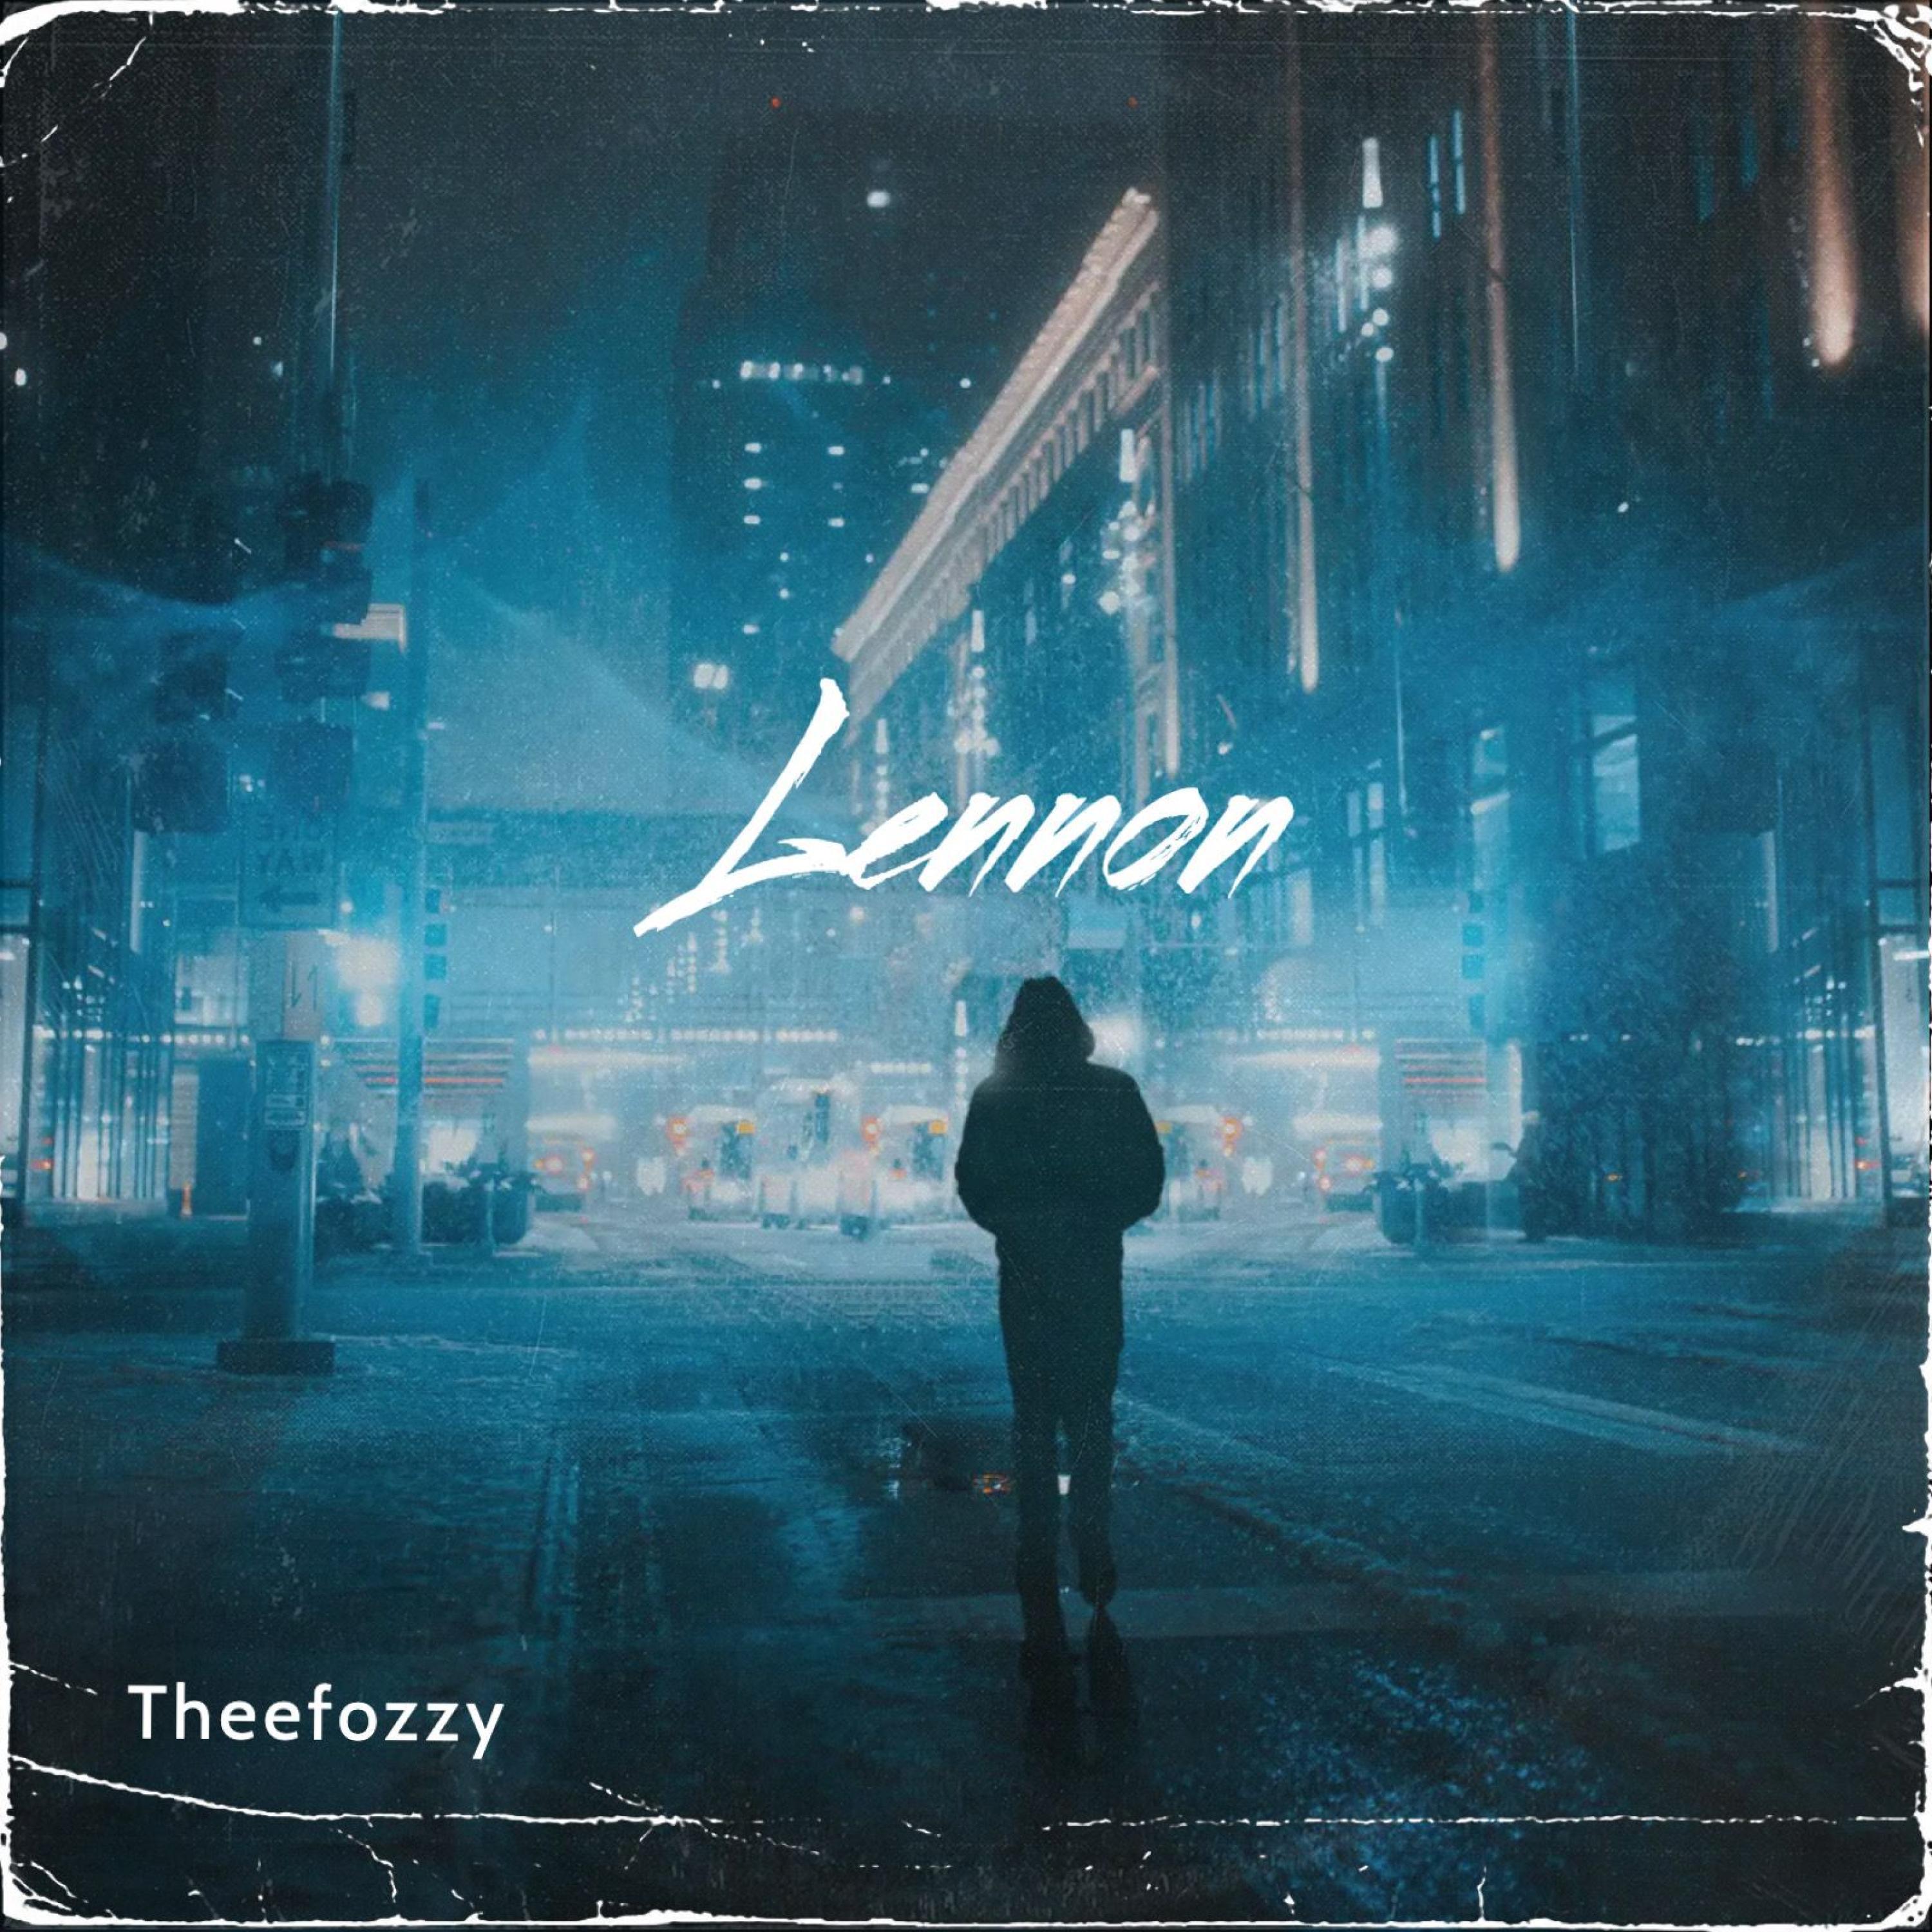 Thee Fozzy - Lennon